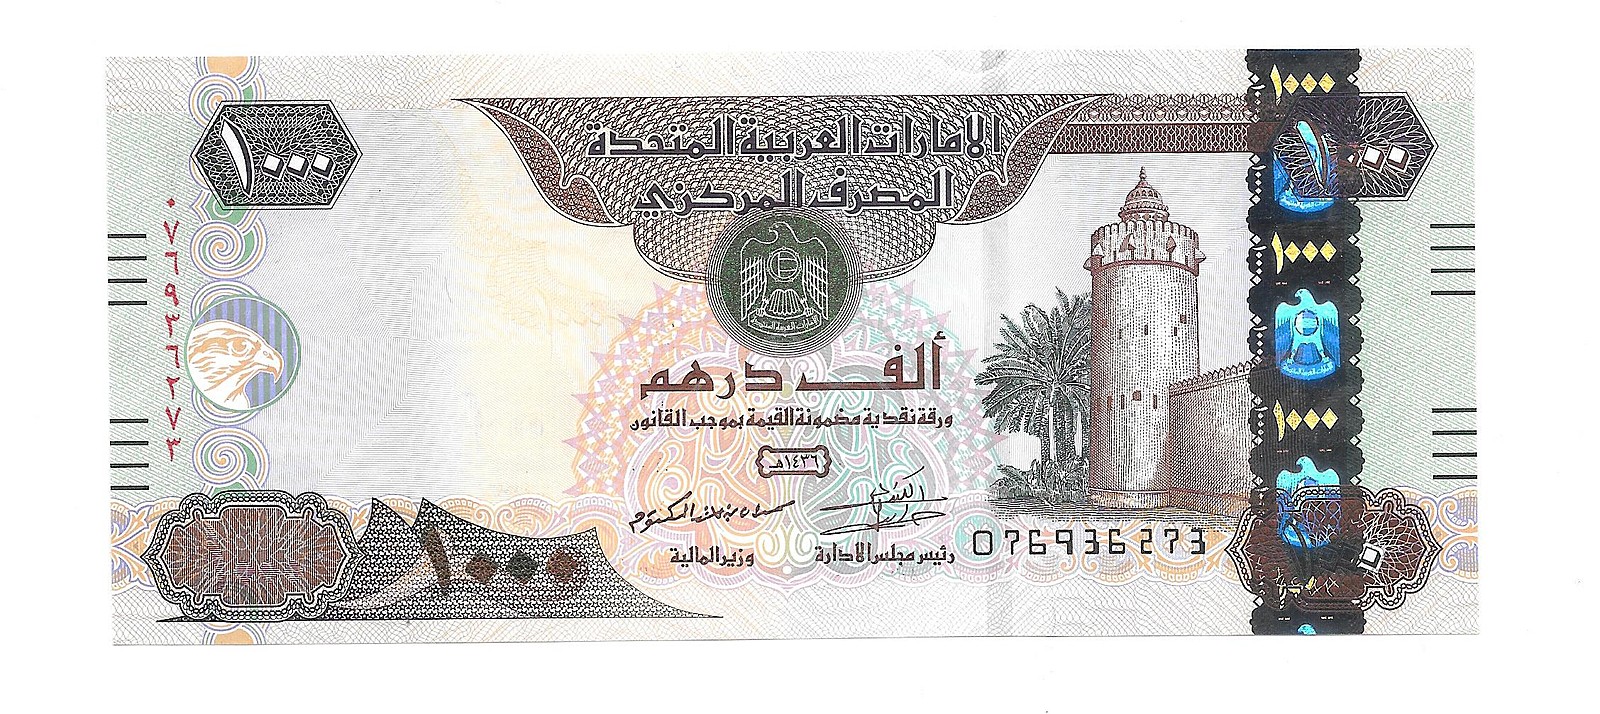 330 дирхам. Купюры дирхамы ОАЭ. 1000 Дирхам ОАЭ банкноты. Банкноты United arab Emirates,2008, 50 dirhams. Валюта ОАЭ купюры 1000.